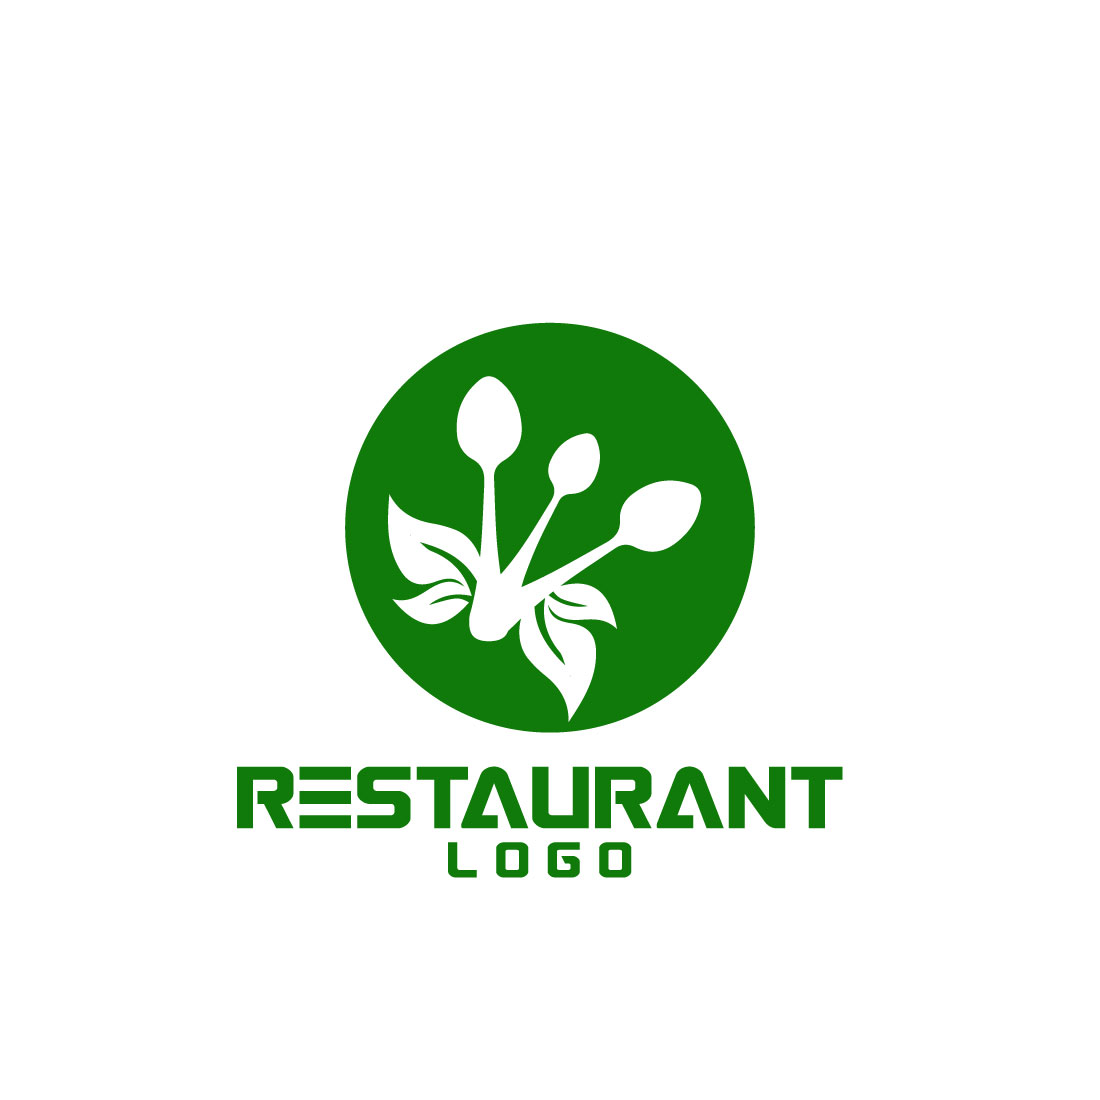 Free Organic Cute Food Logo cover image.